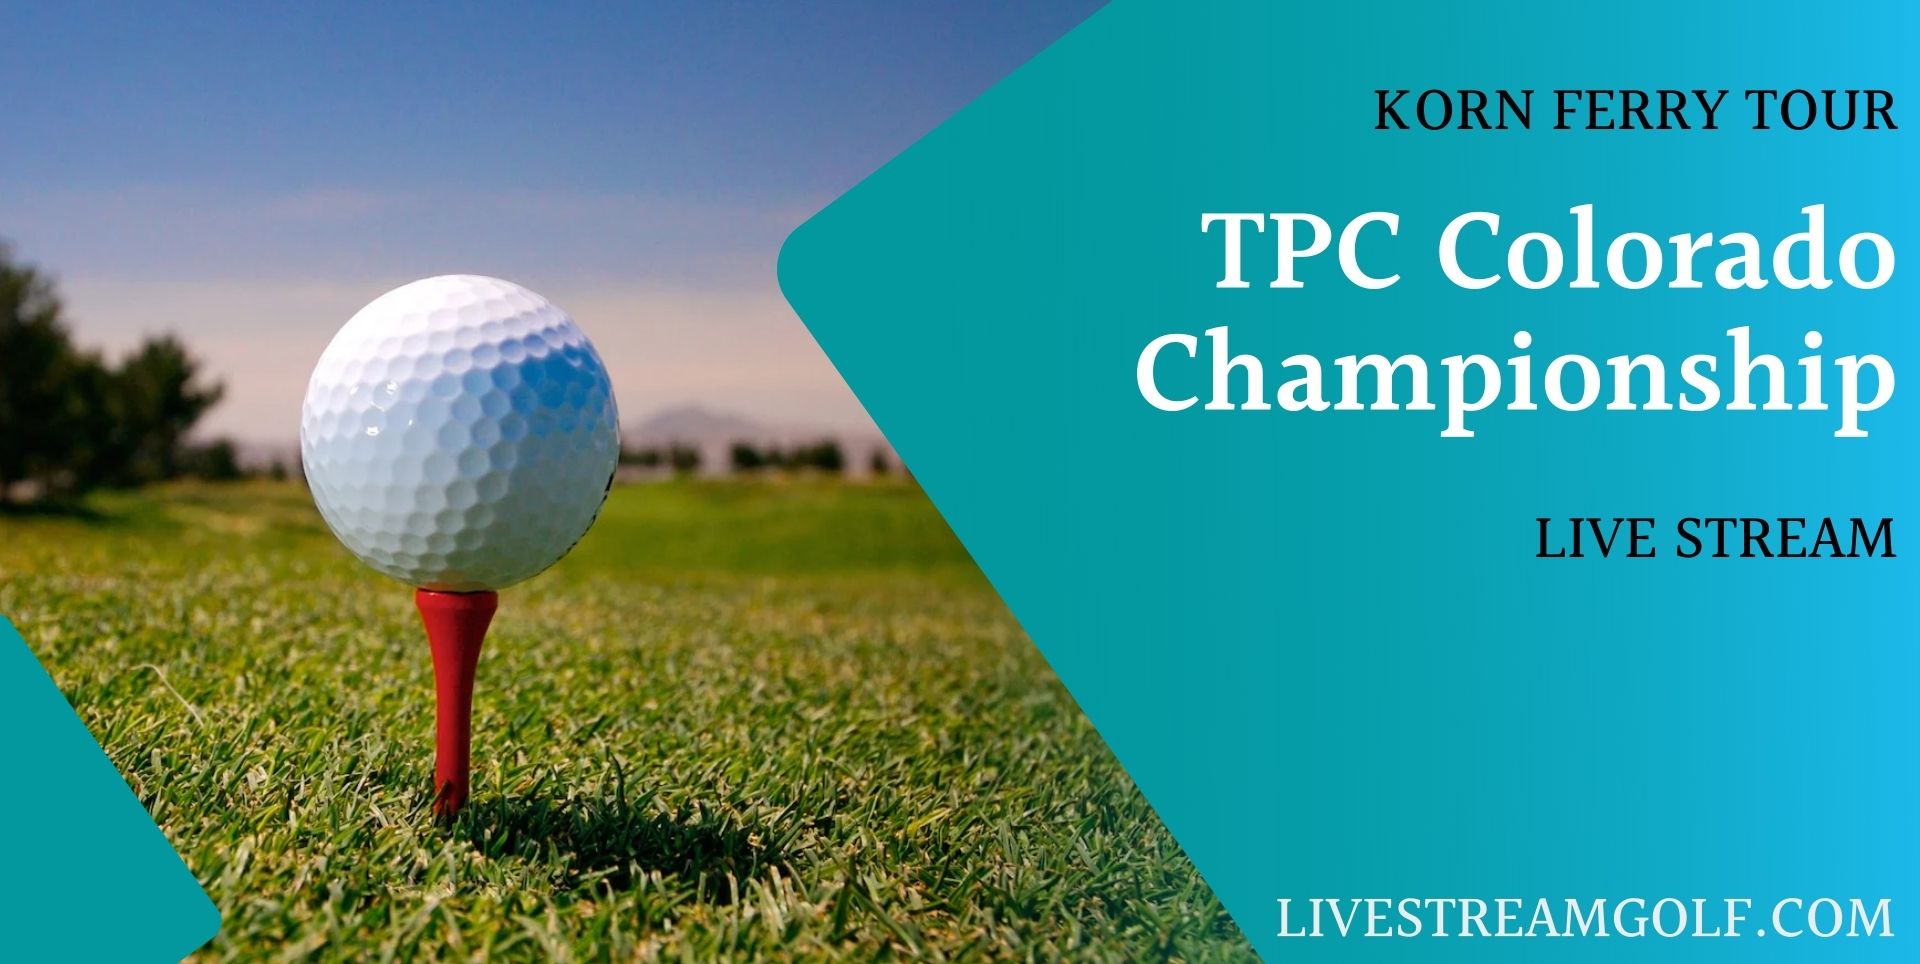 TPC Colorado Championship Day 1 Live Stream: Korn Ferry 2022